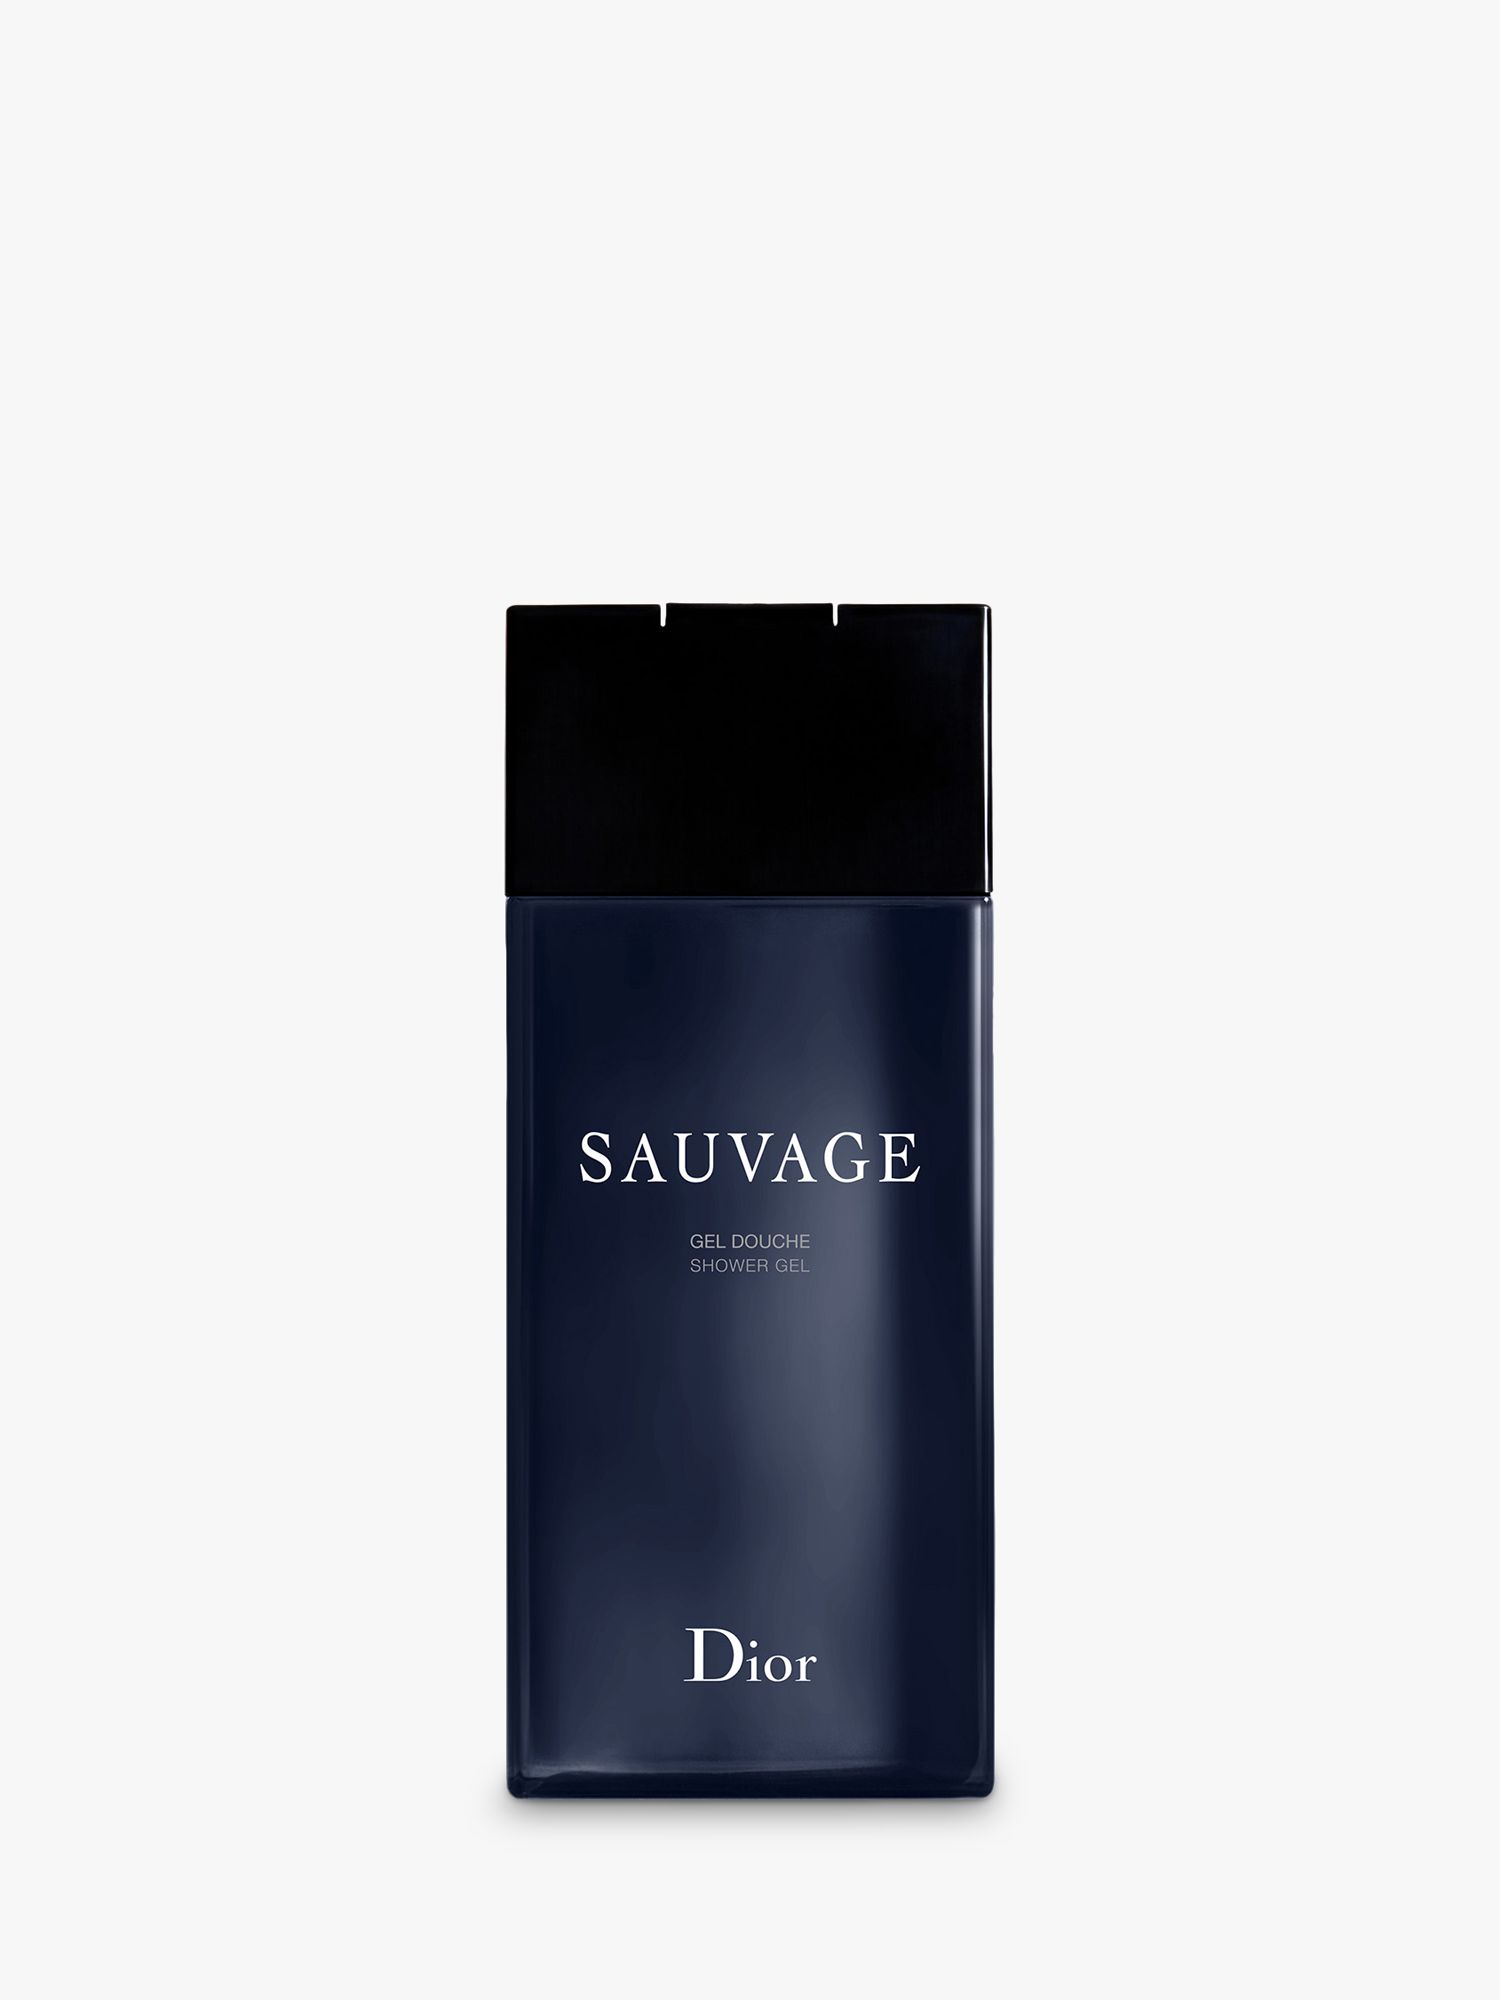 dior sauvage shower gel debenhams